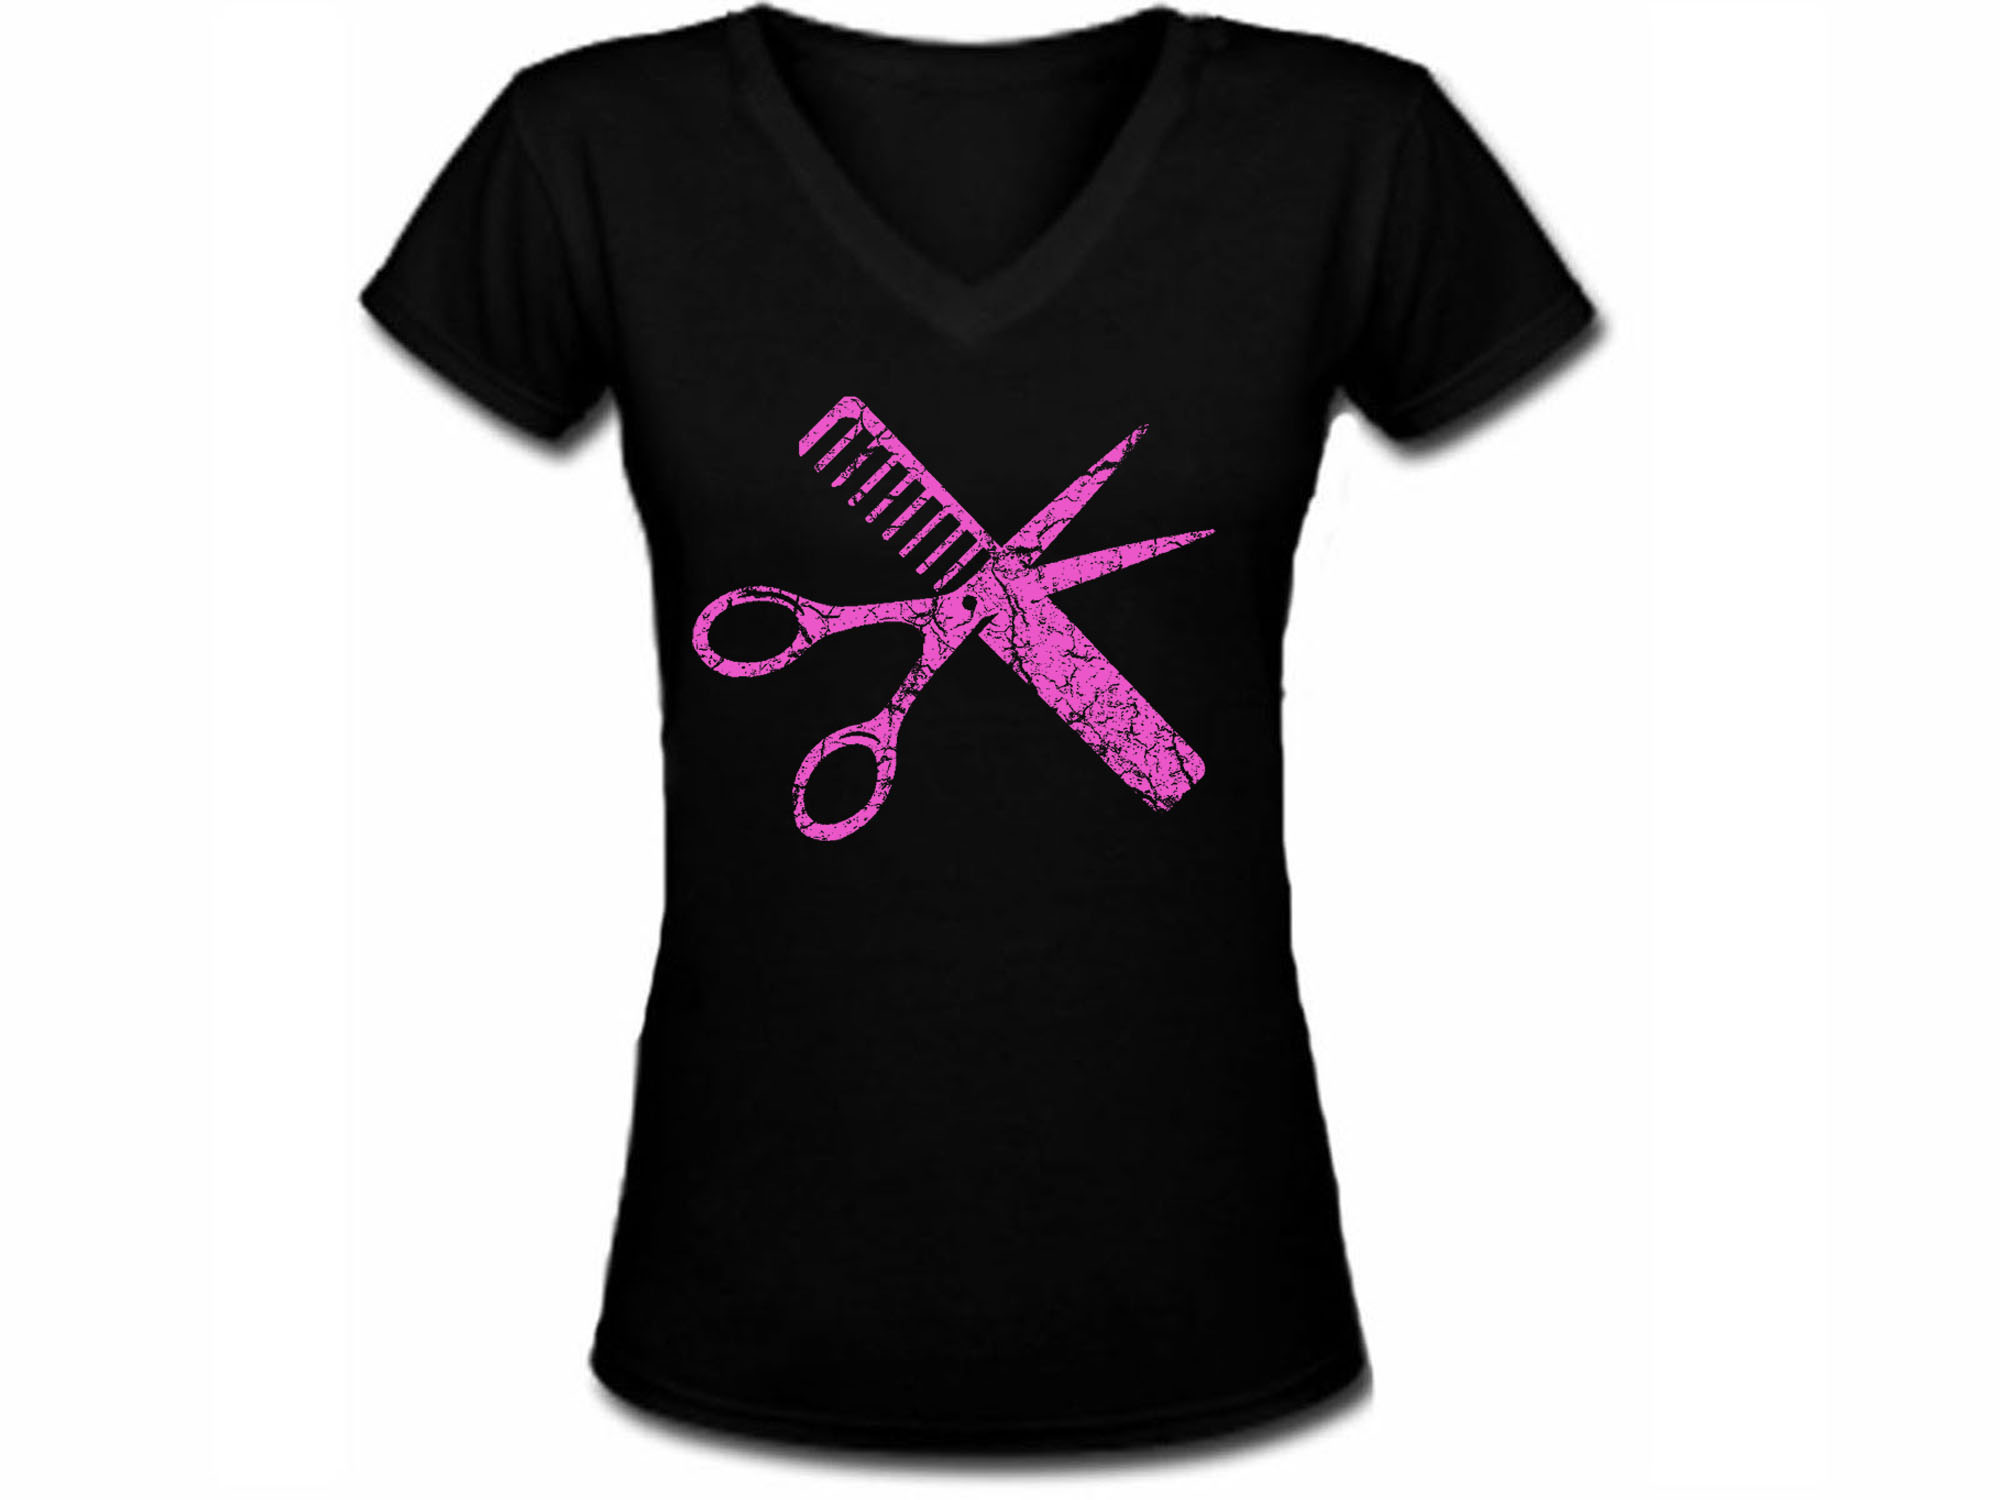 Hairstylist biber tools v neck t shirt 2